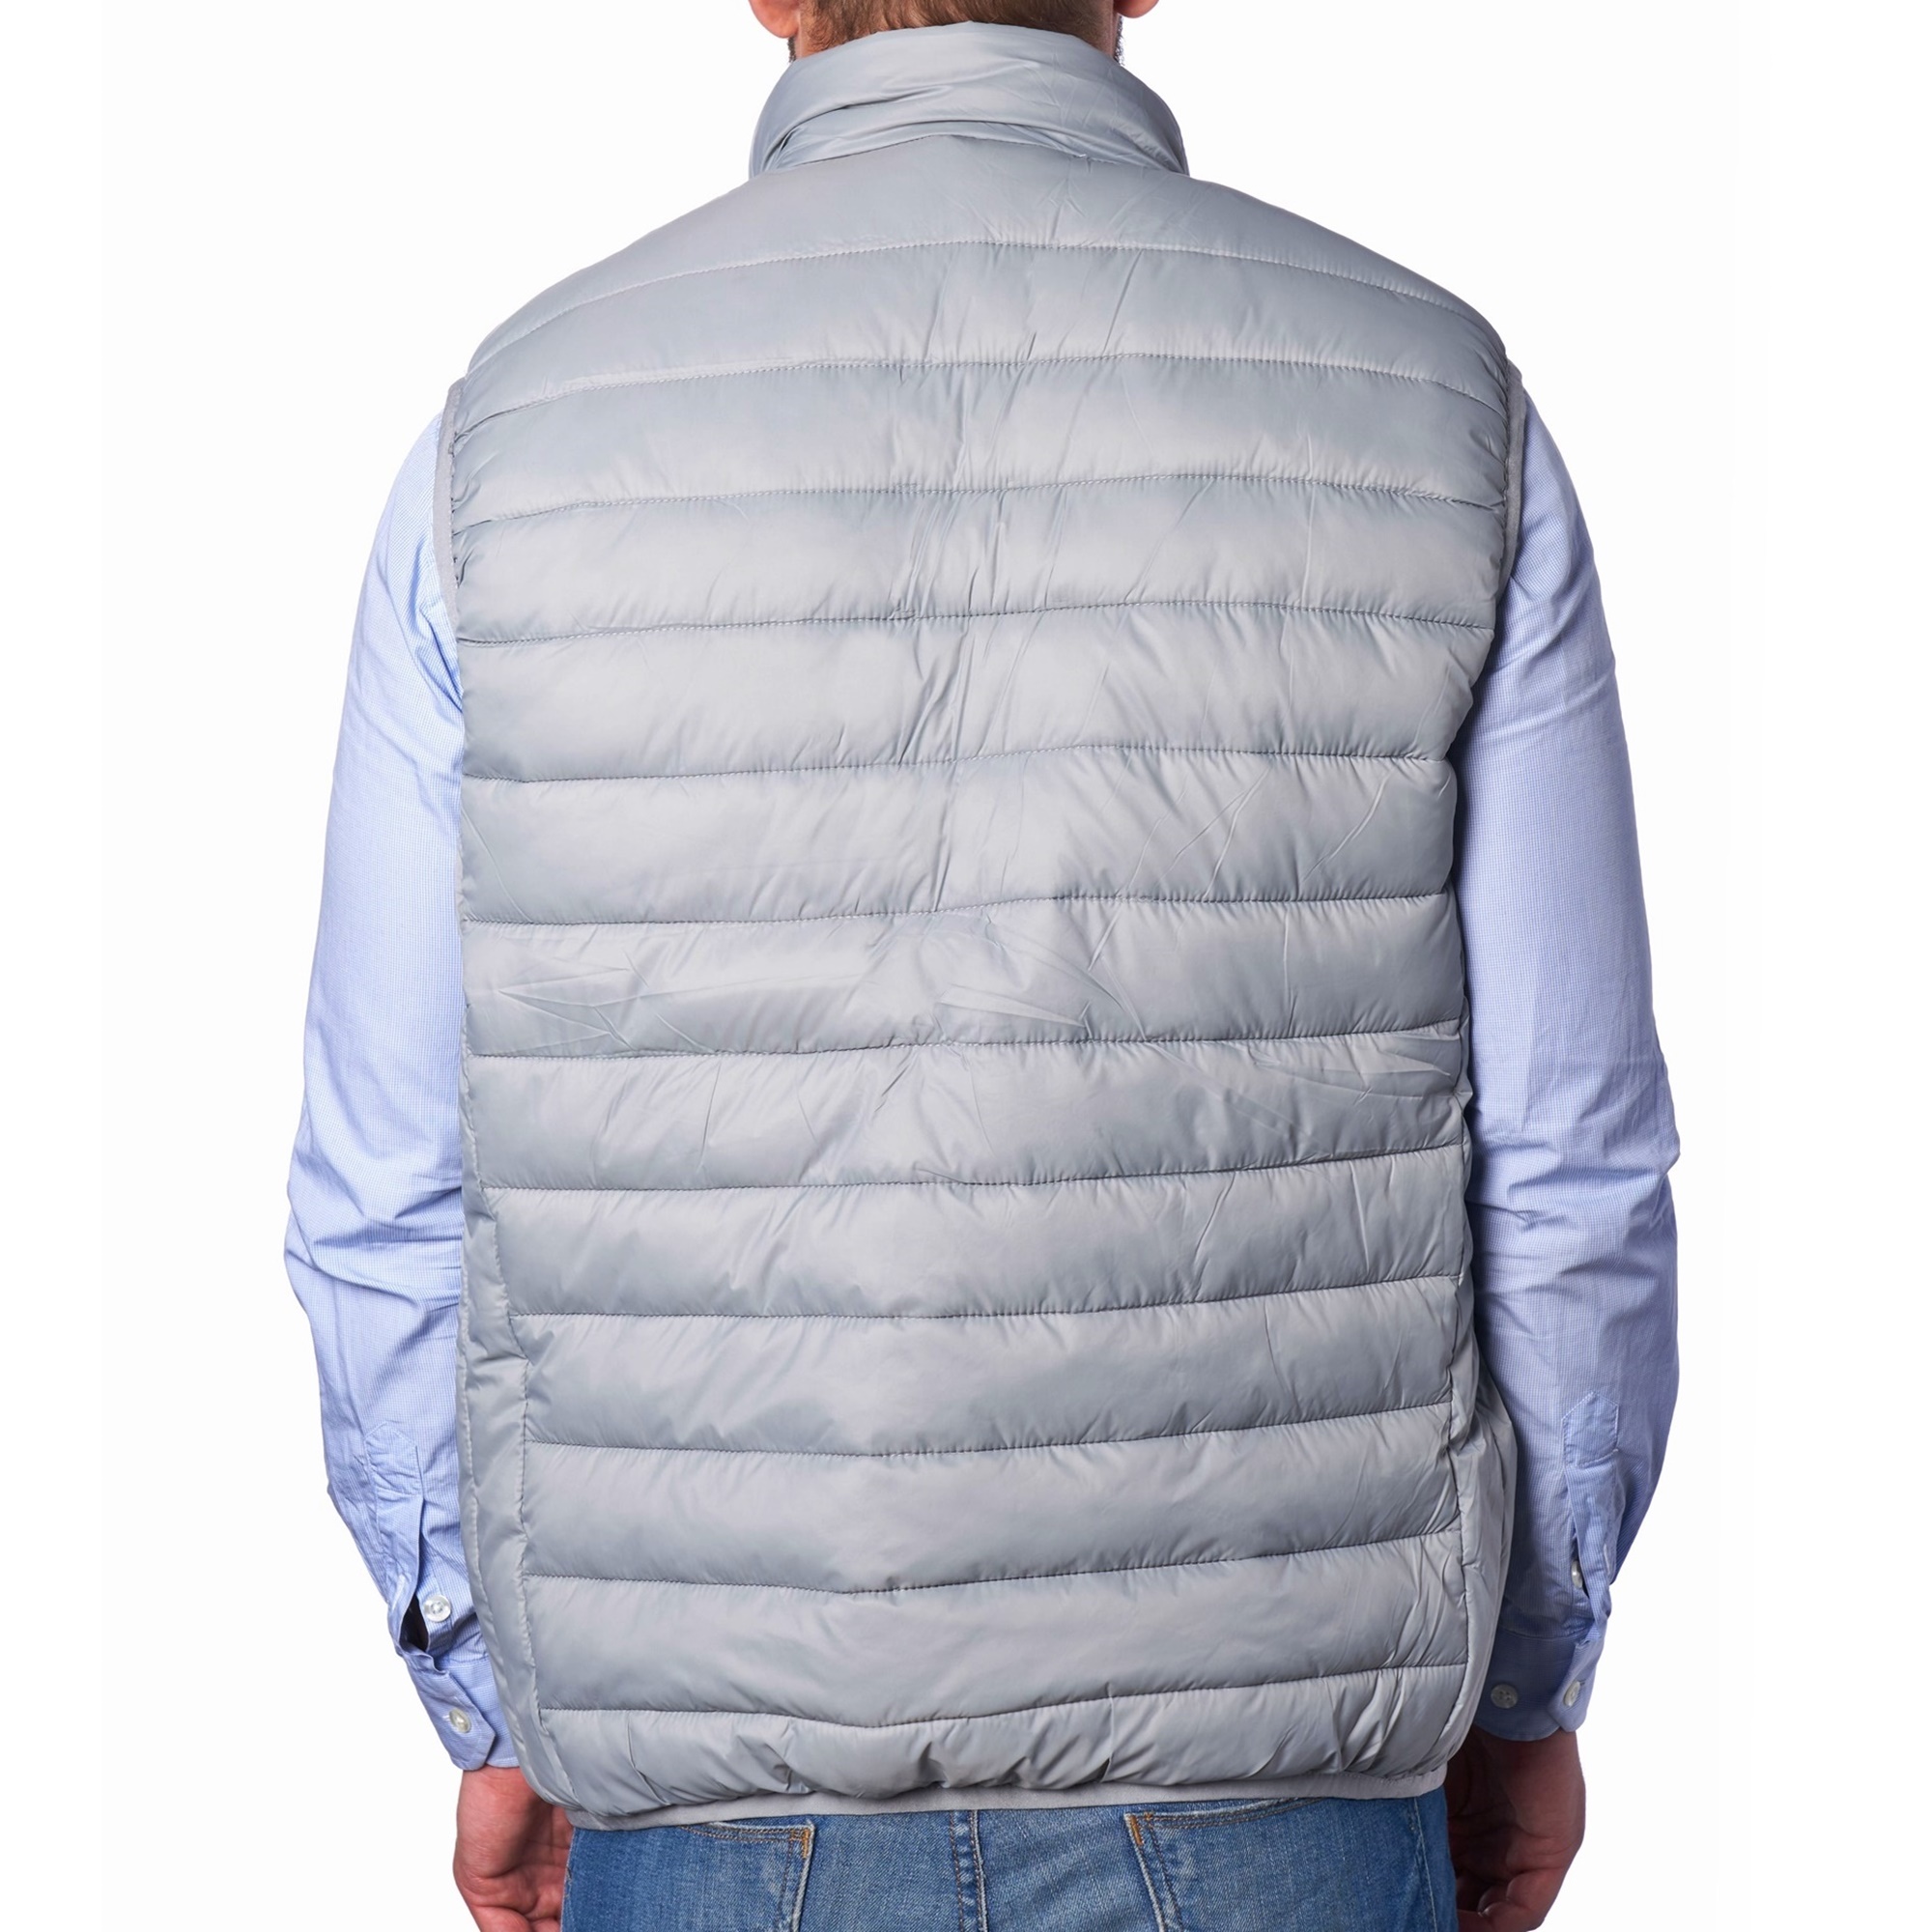 Alpine Swiss Mens Down Alternative Vest Jacket Lightweight Packable Puffer Vest - image 7 of 7